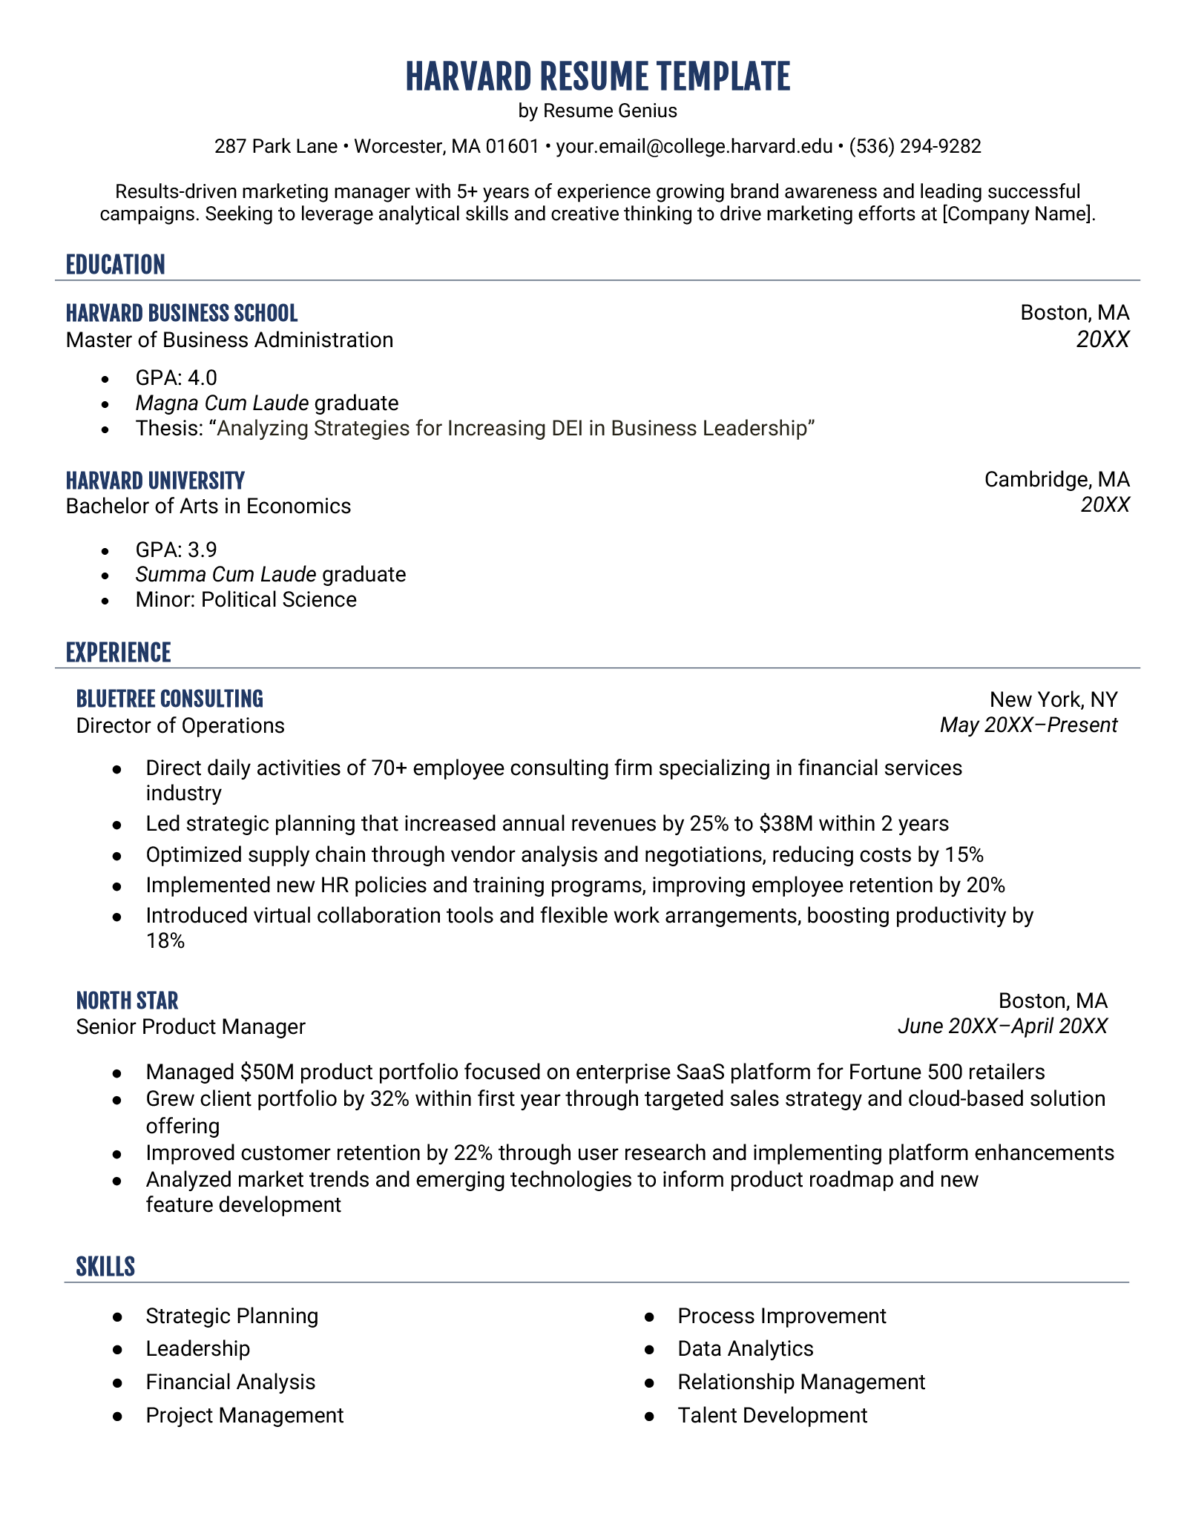 student resume template harvard